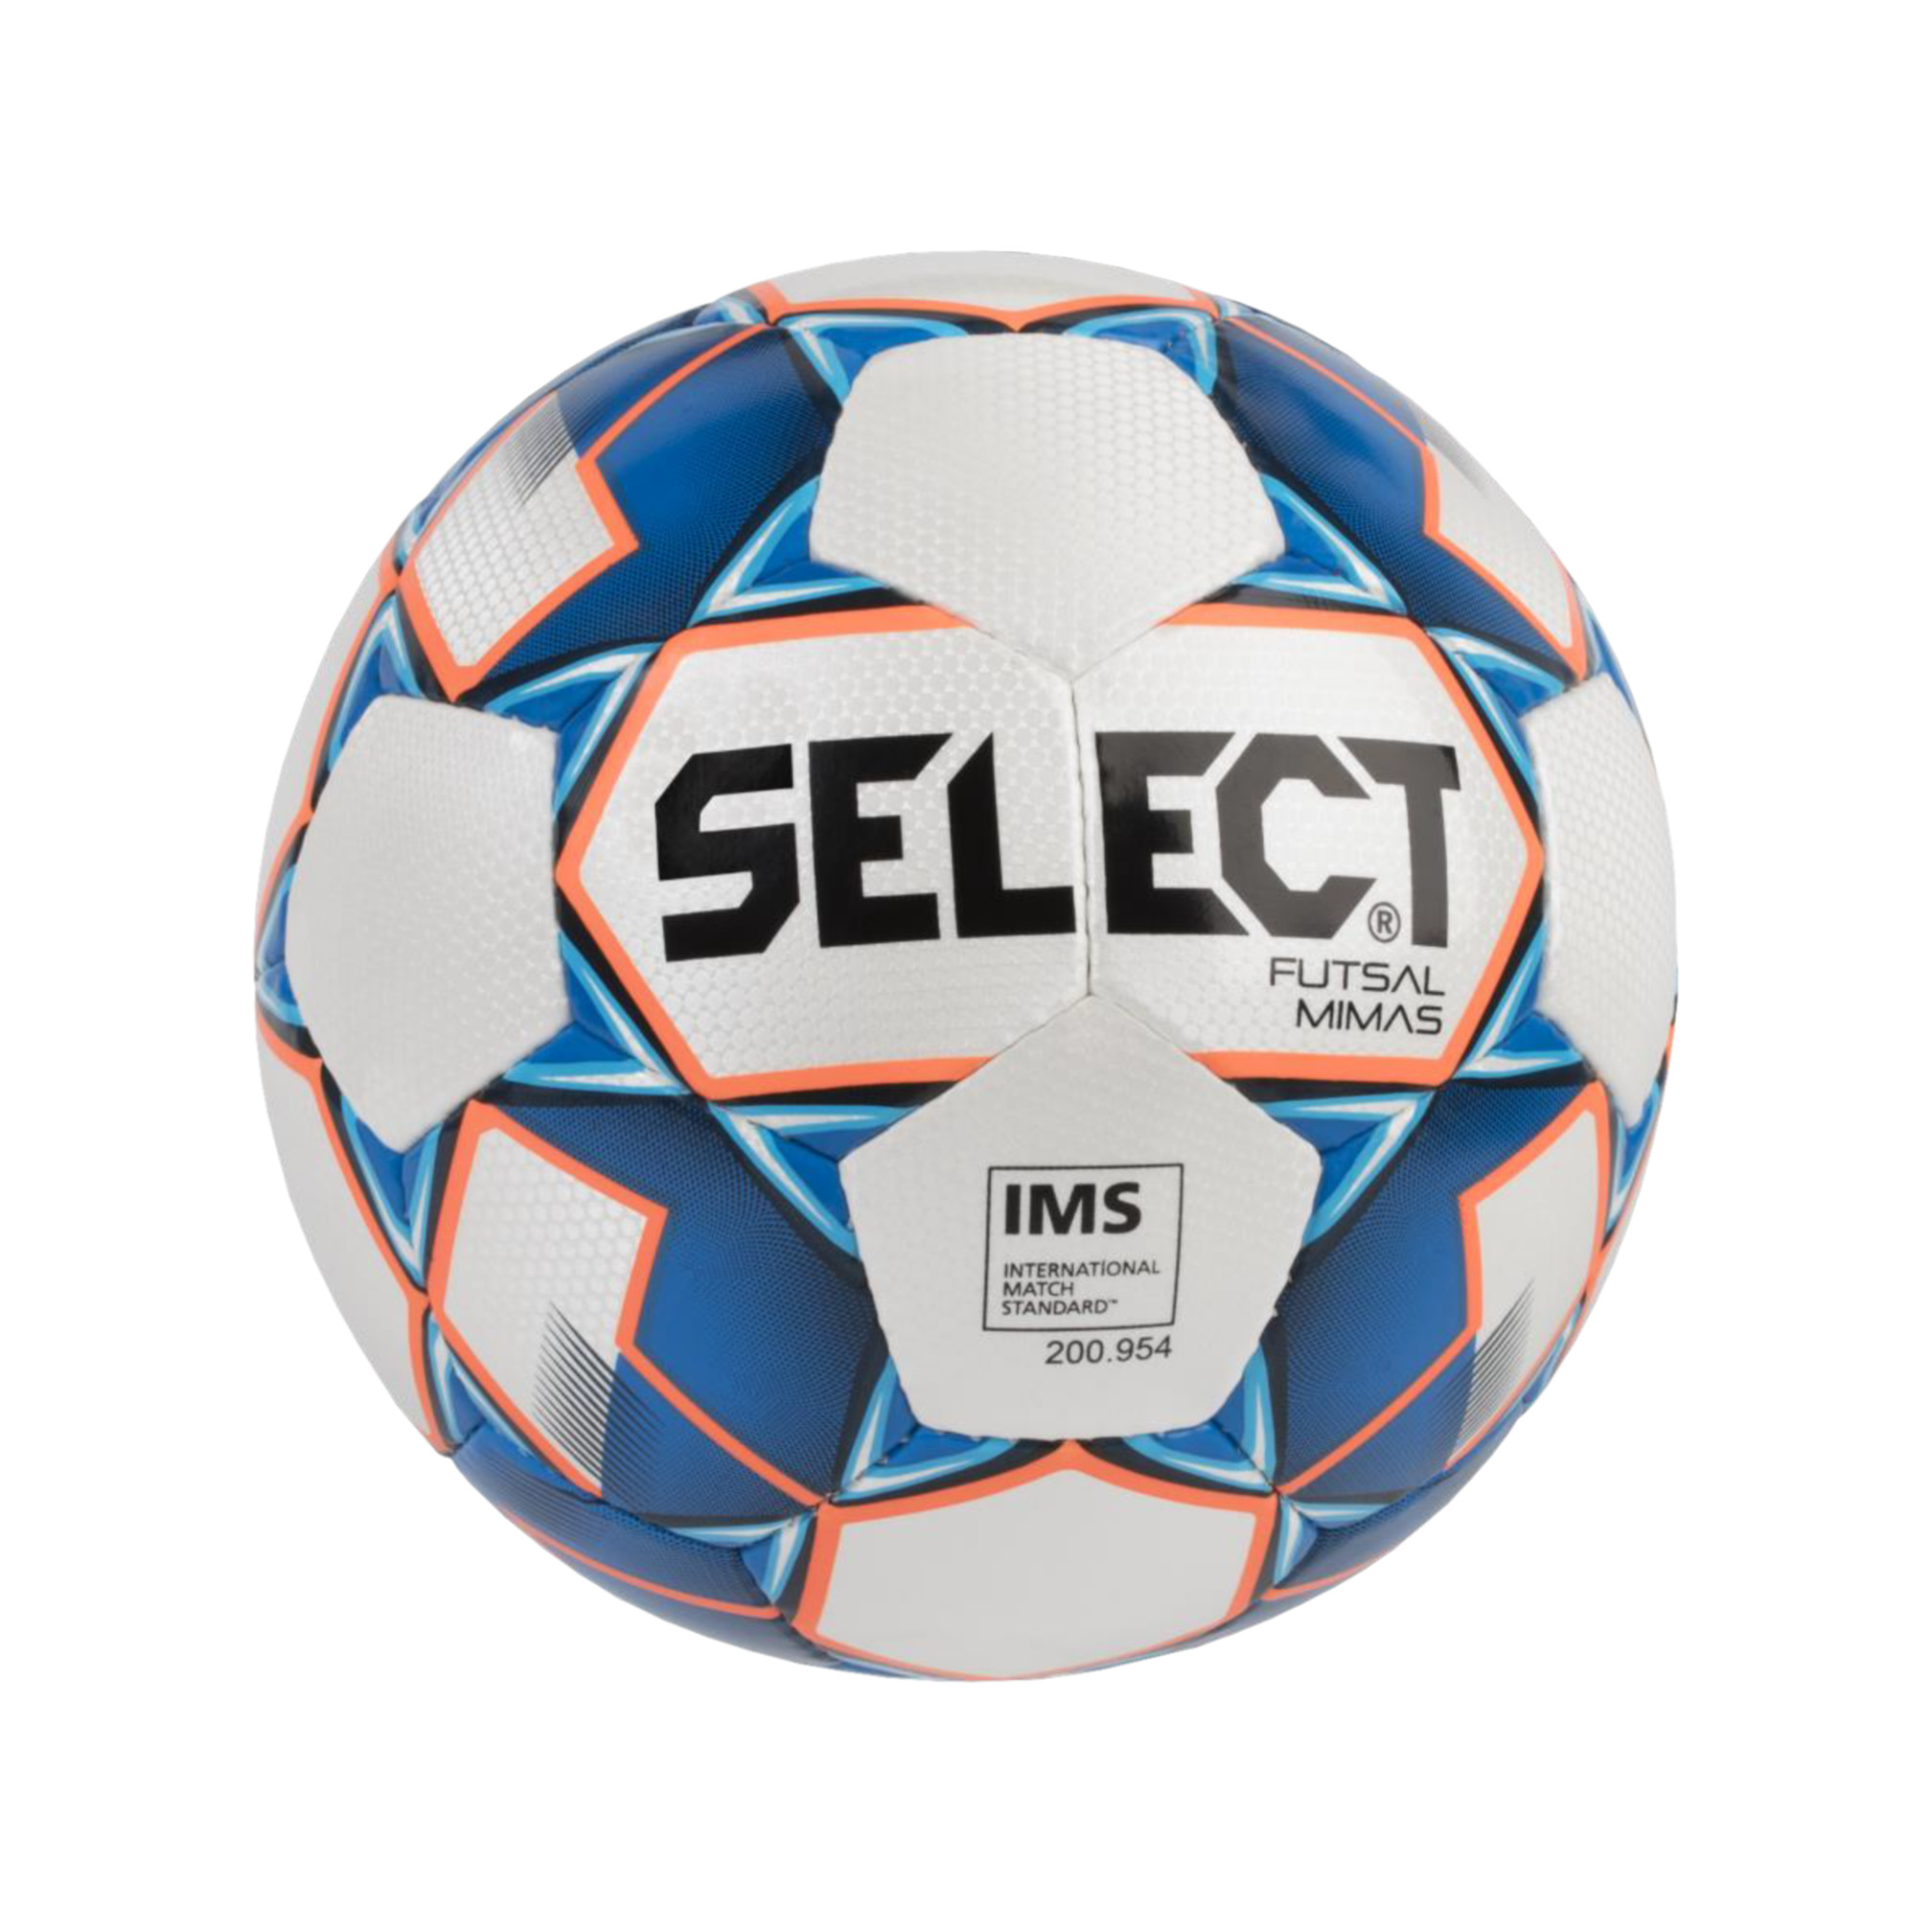 Select Futsal Mimas, M4